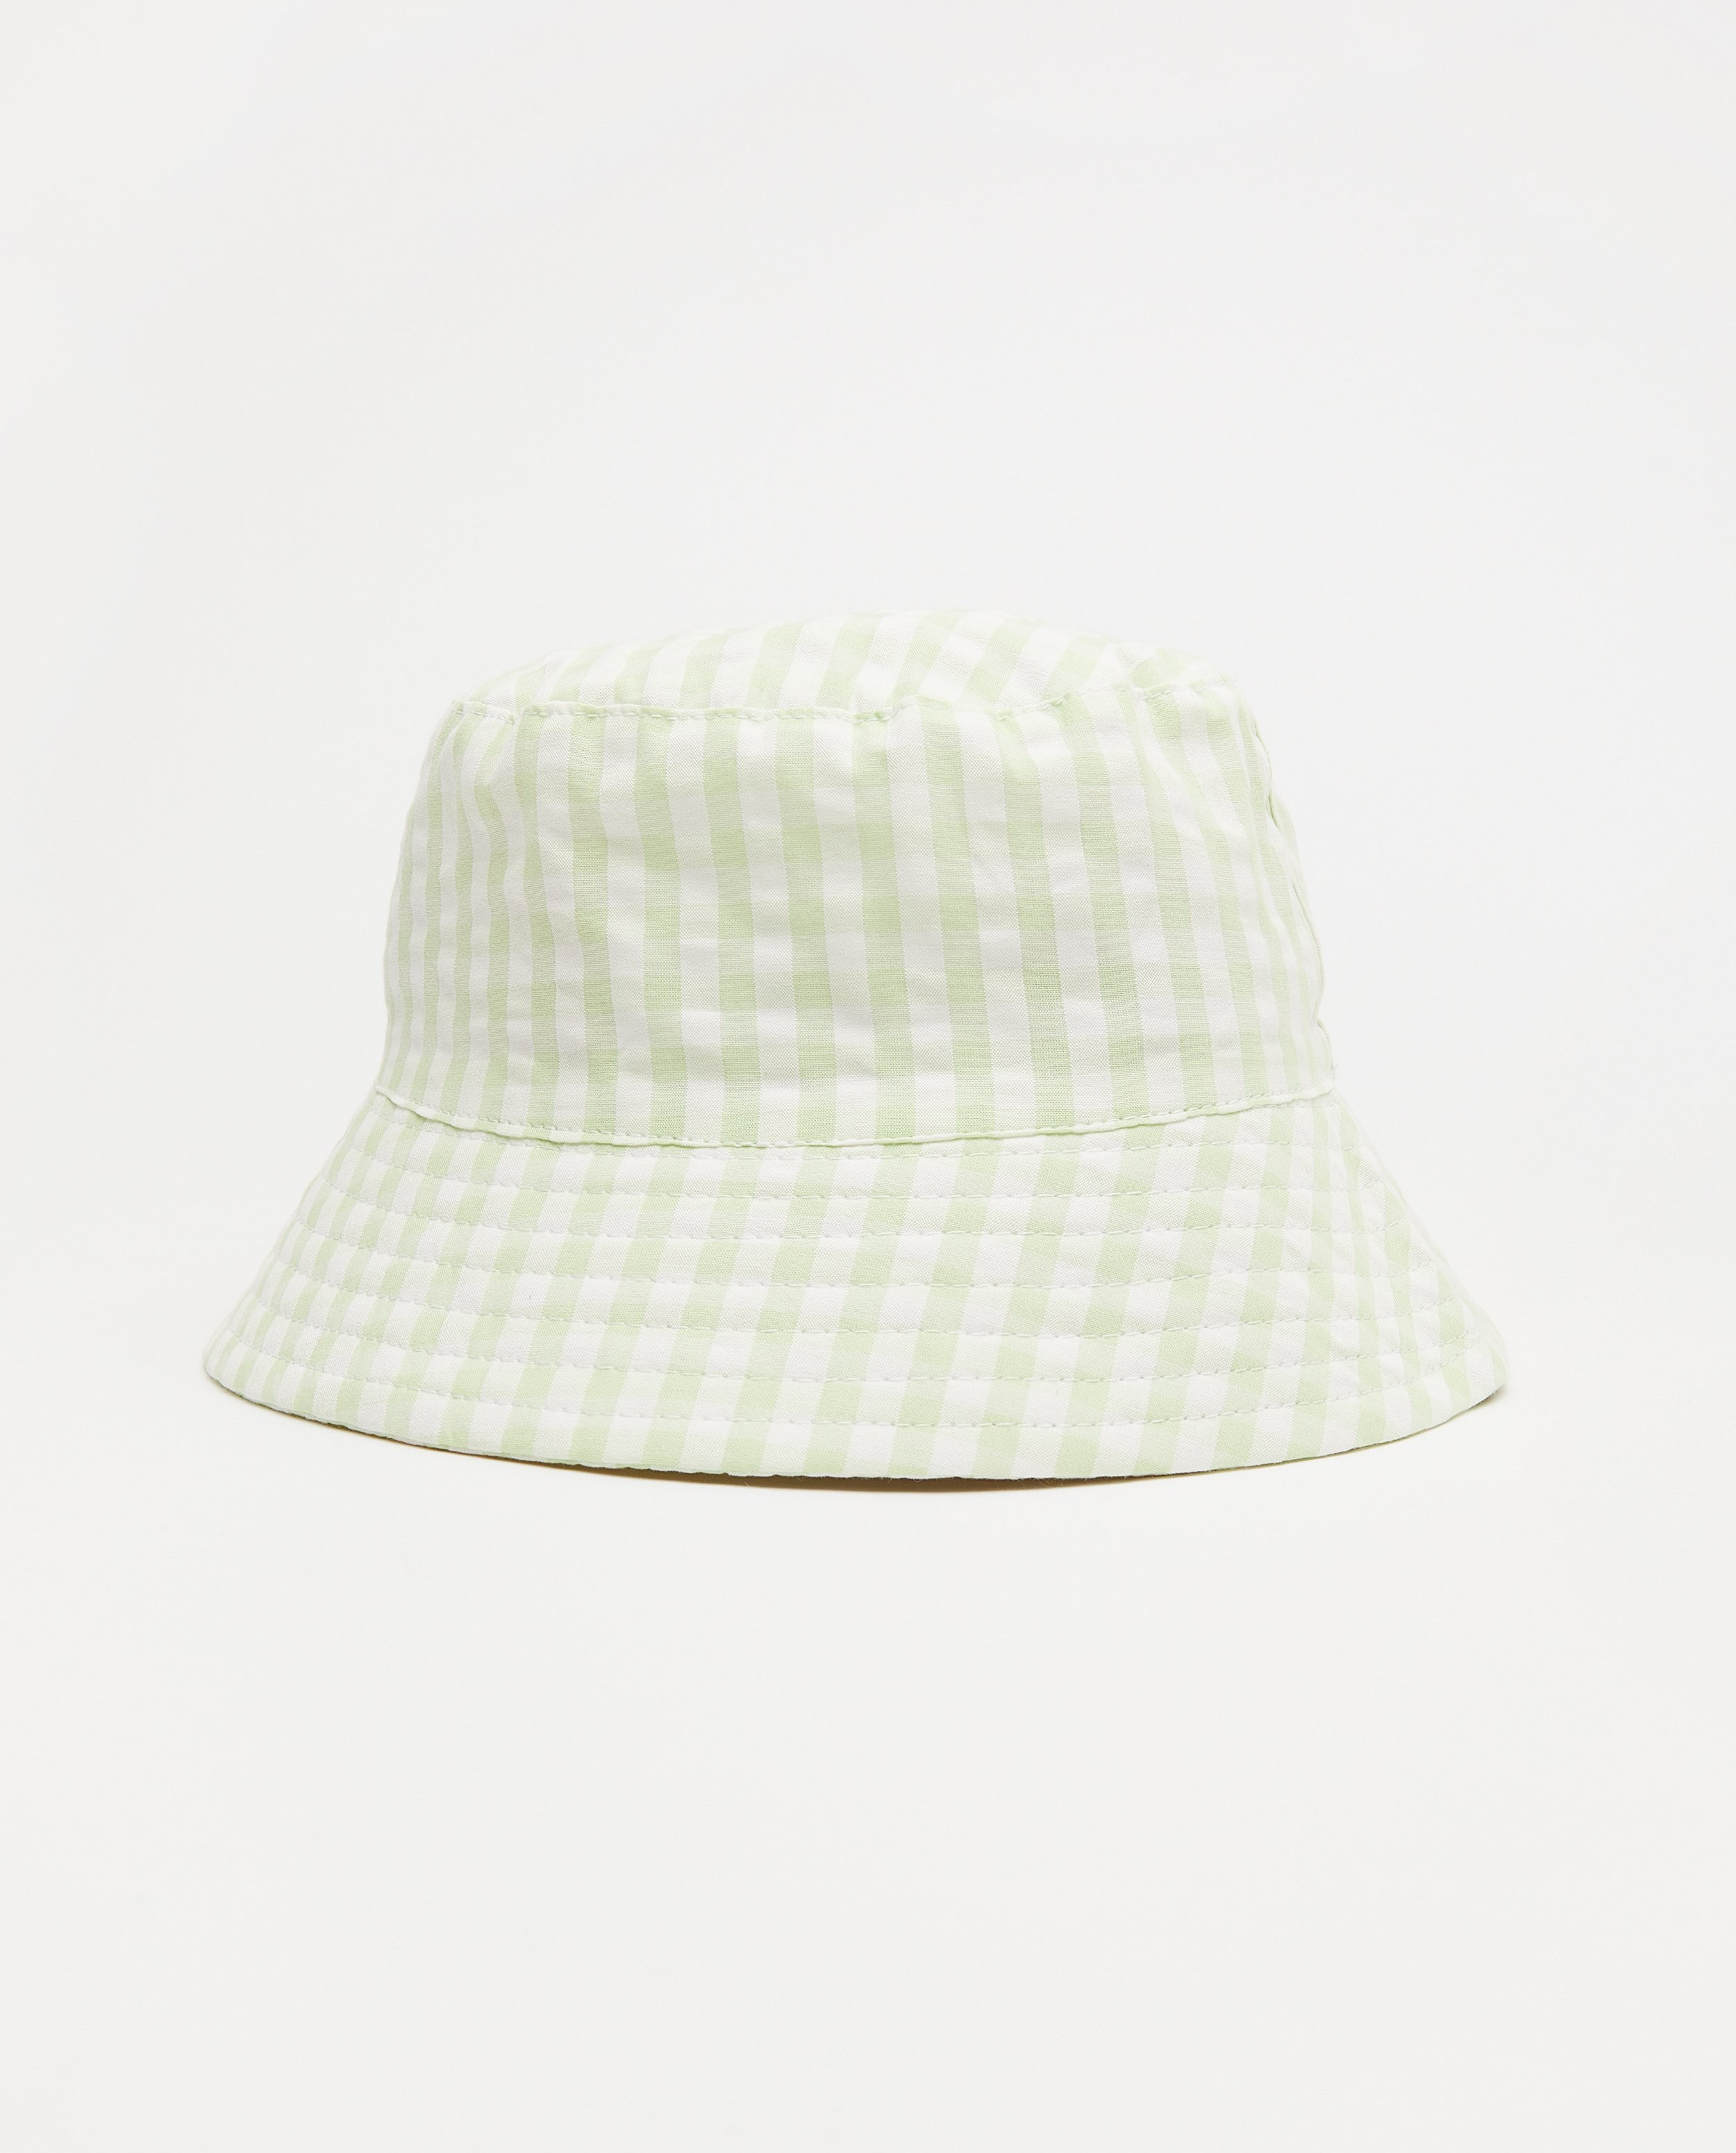 Chapeau blanc-vert Atelier Bossier, enfants - à carreaux - Atelier Bossier